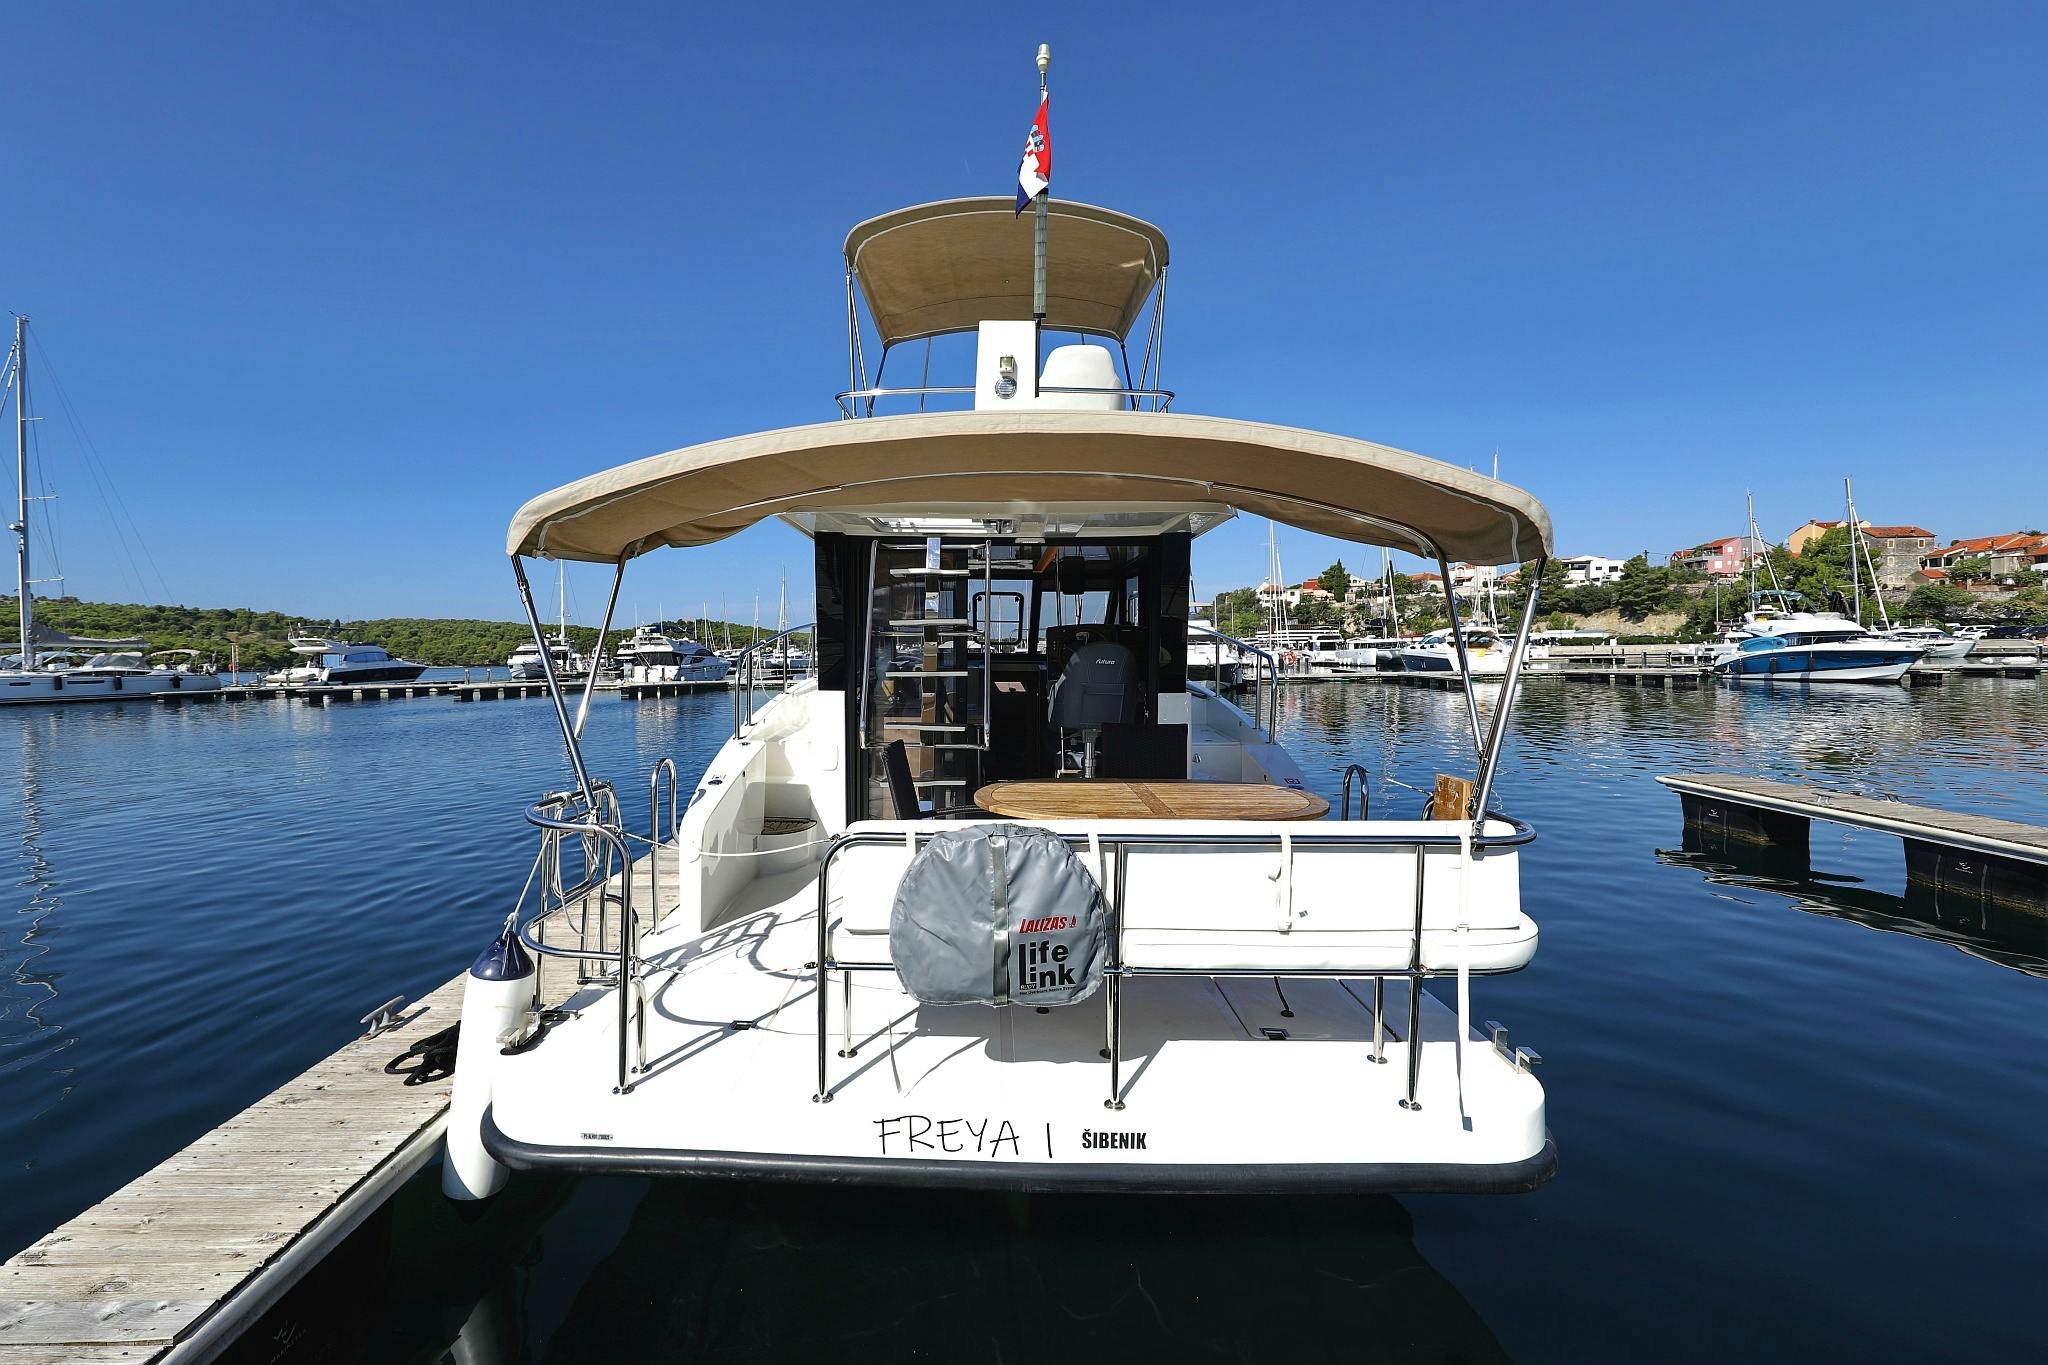 Book Futura 40 Grand Horizon Motor yacht for bareboat charter in Marina Mandalina, Sibenik, Šibenik region, Croatia with TripYacht!, picture 1